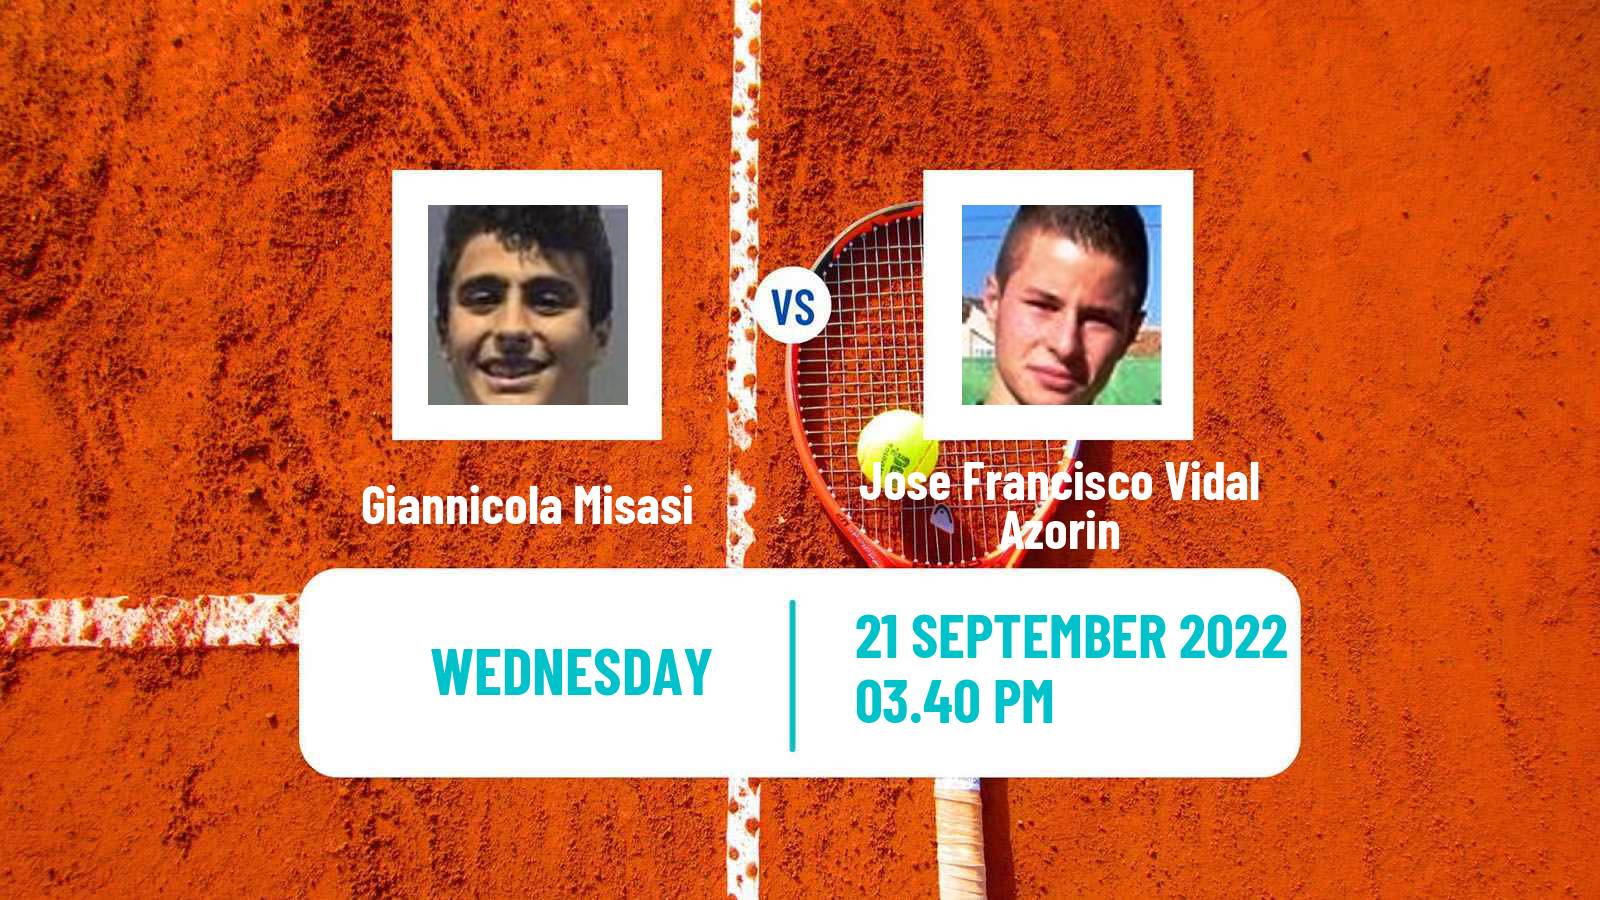 Tennis ITF Tournaments Giannicola Misasi - Jose Francisco Vidal Azorin